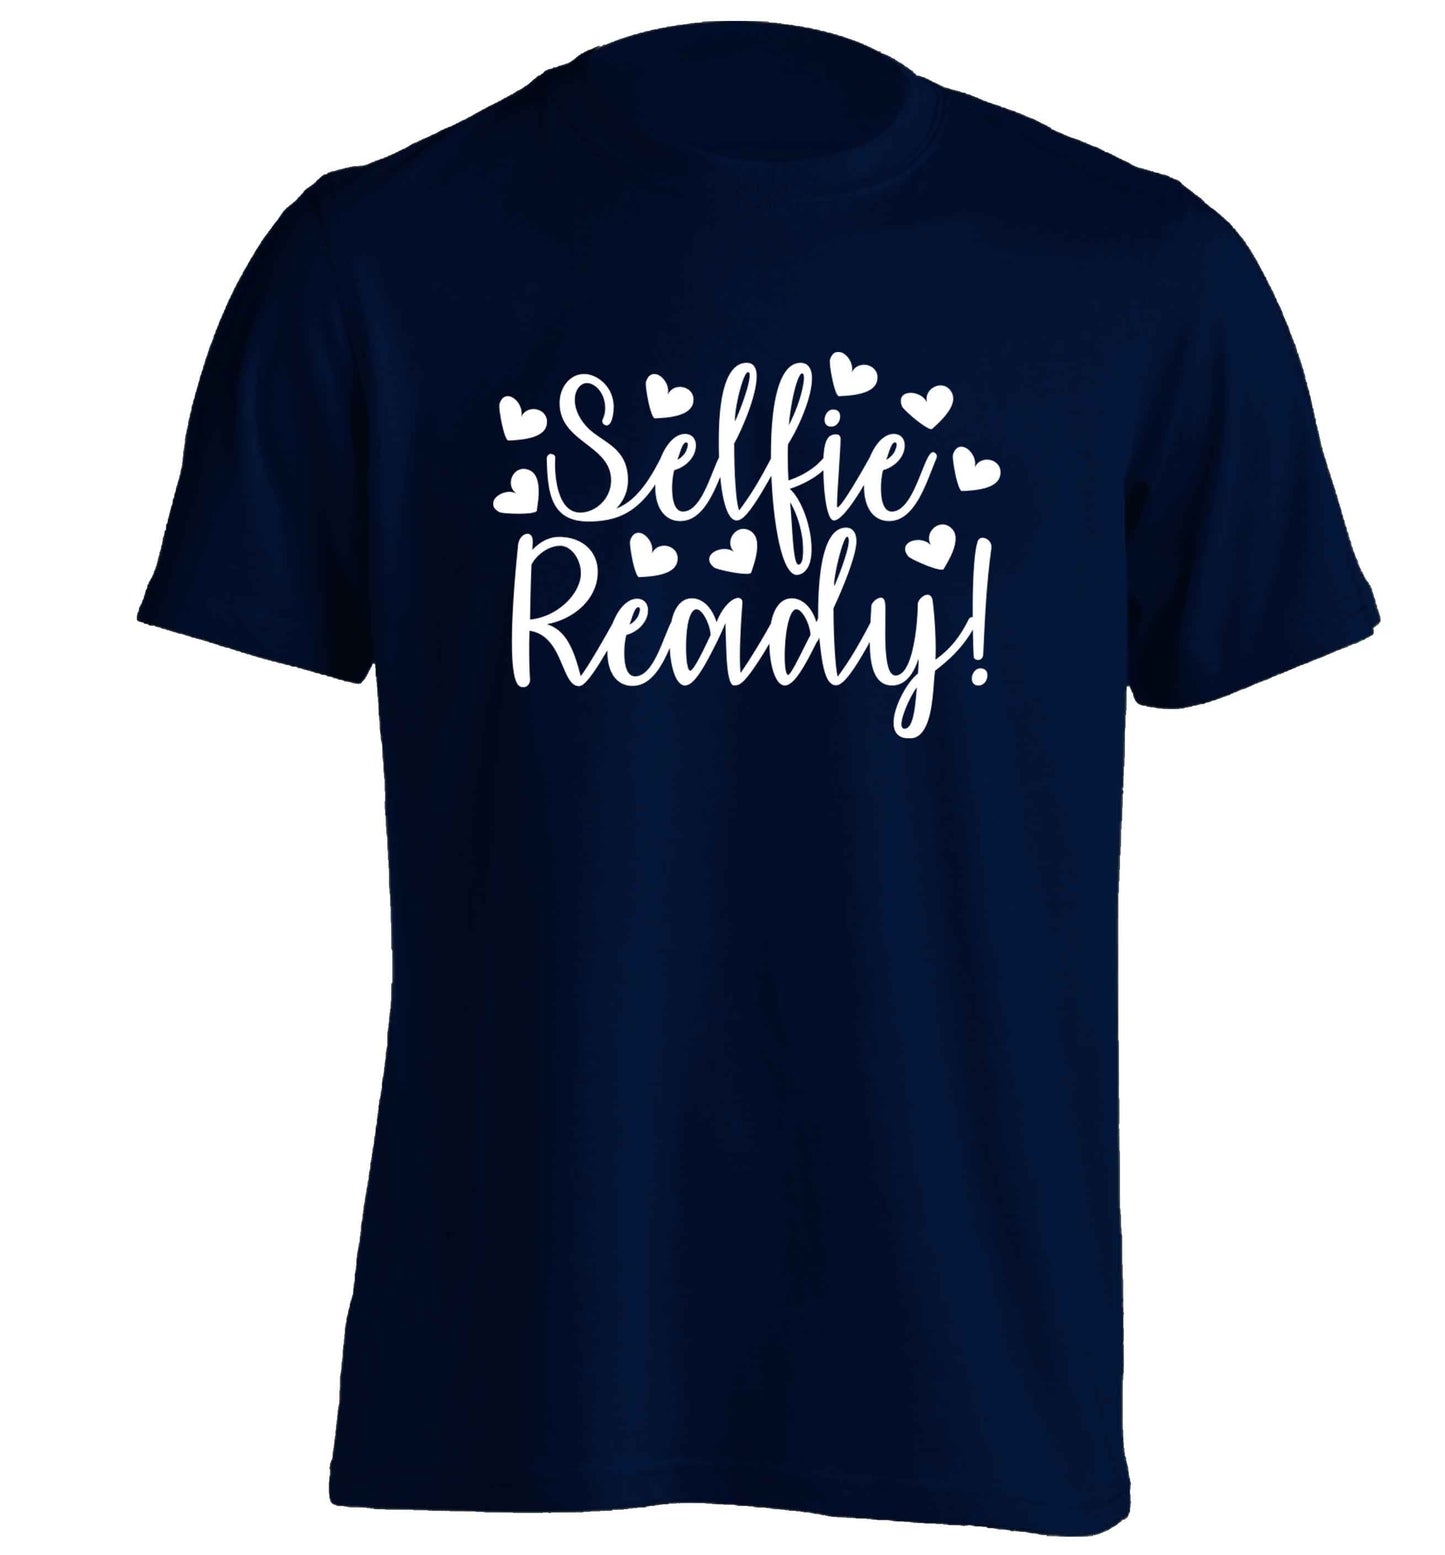 Selfie ready adults unisex navy Tshirt 2XL